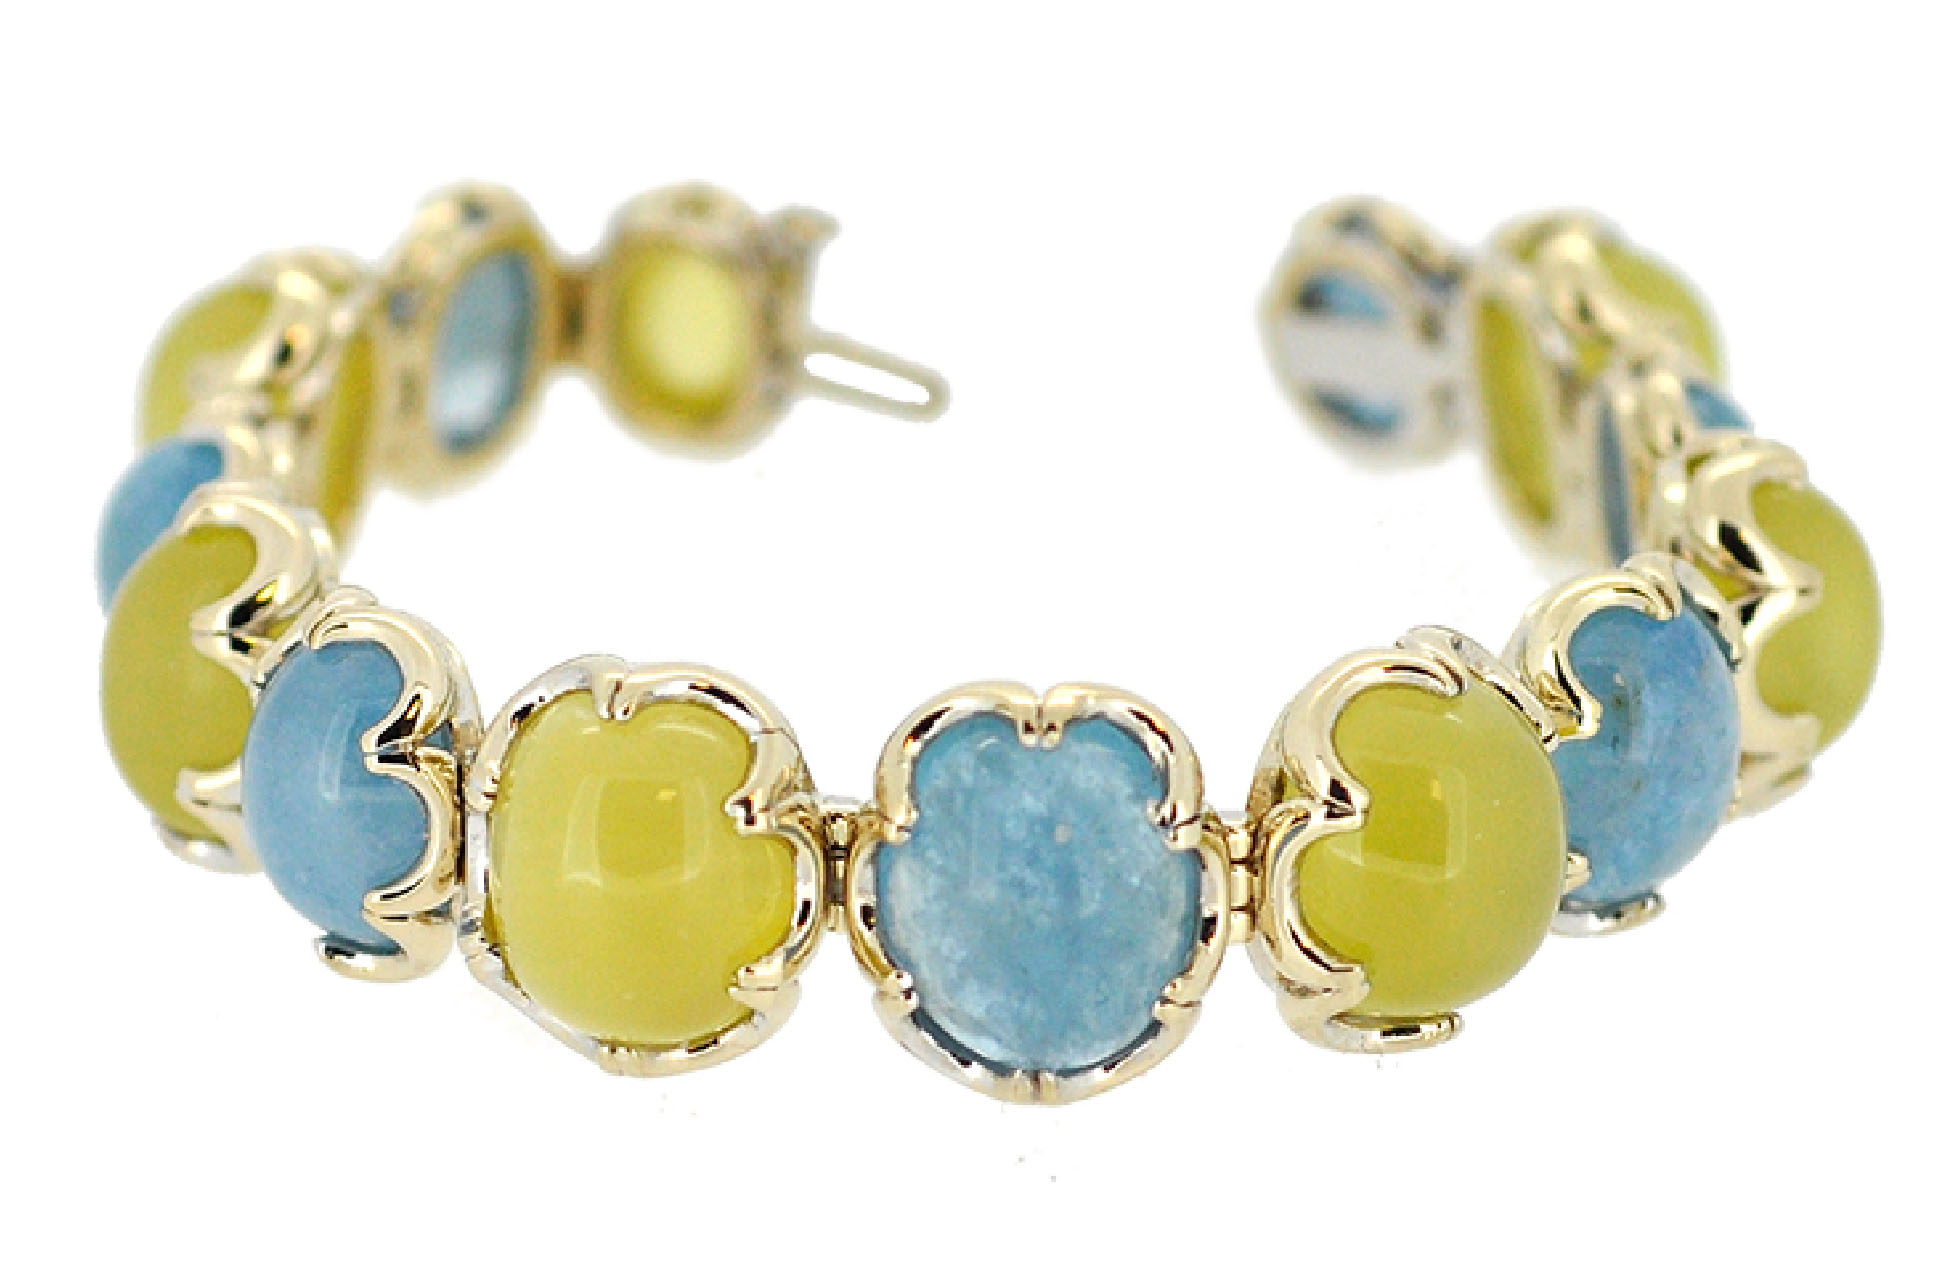 Multi Stone Bracelet by Jessica Surloff. 18K Gold, 17cts. total weight in gemstones